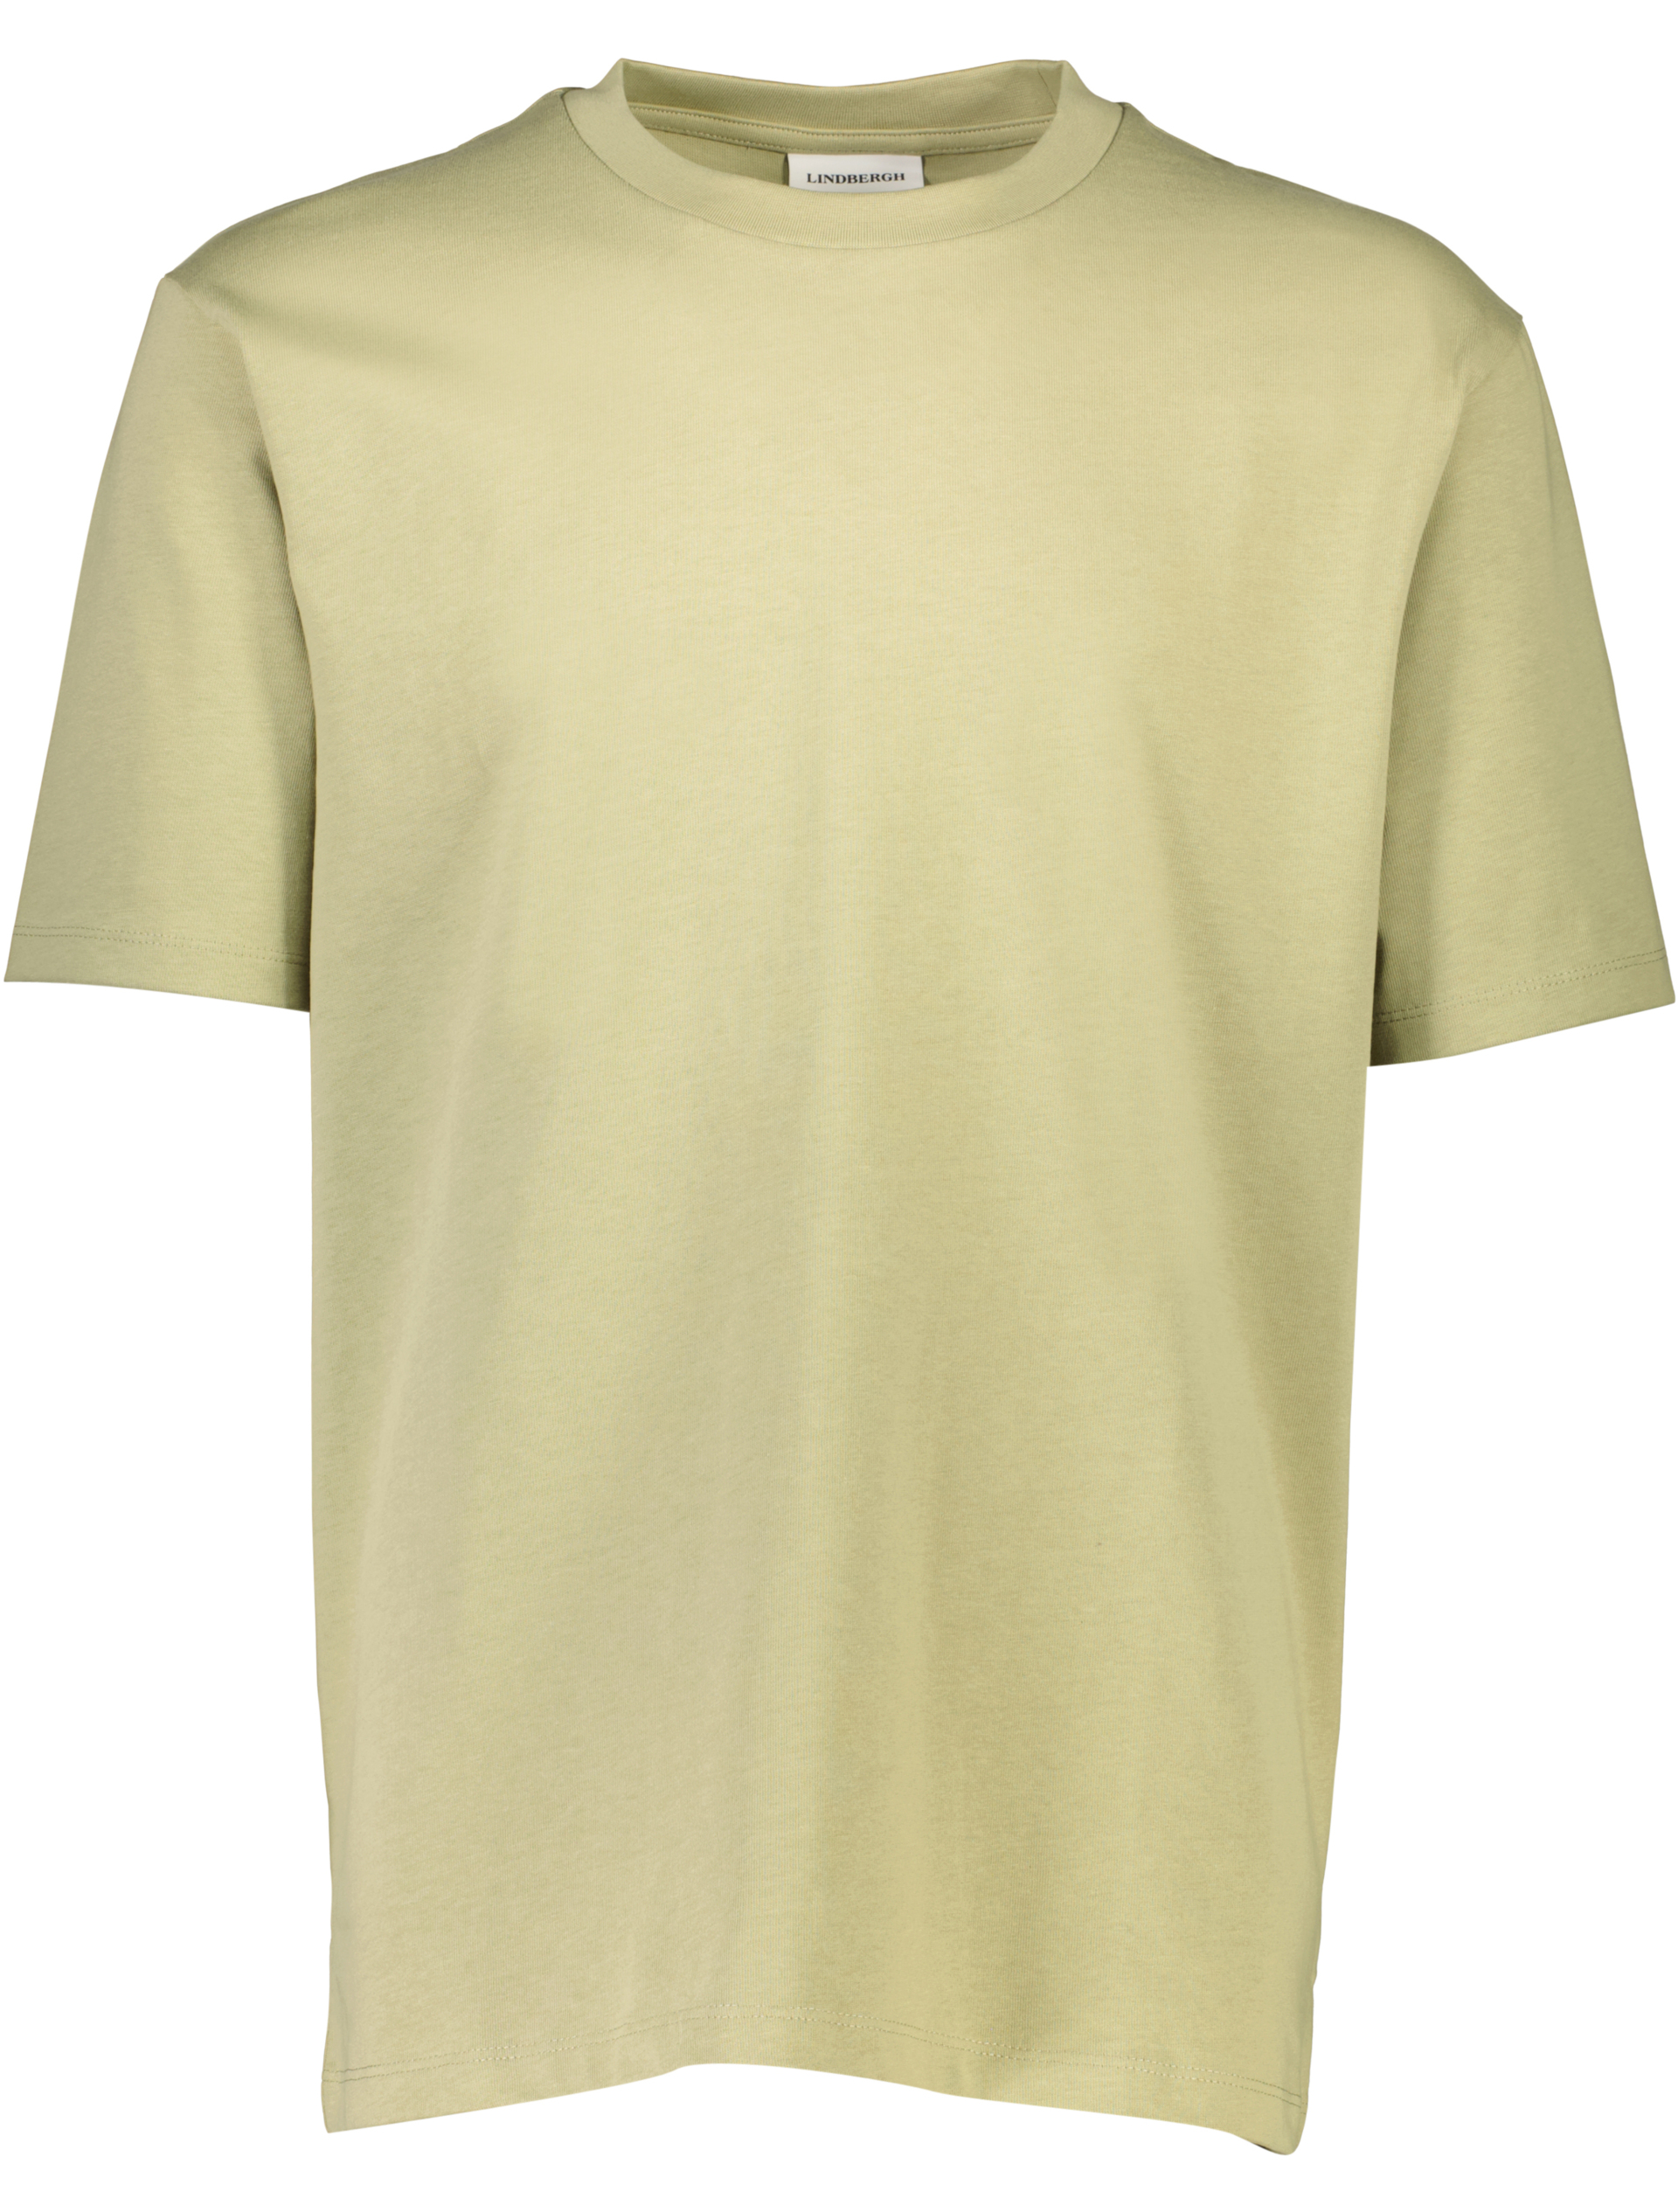 Lindbergh T-shirt grün / lt army